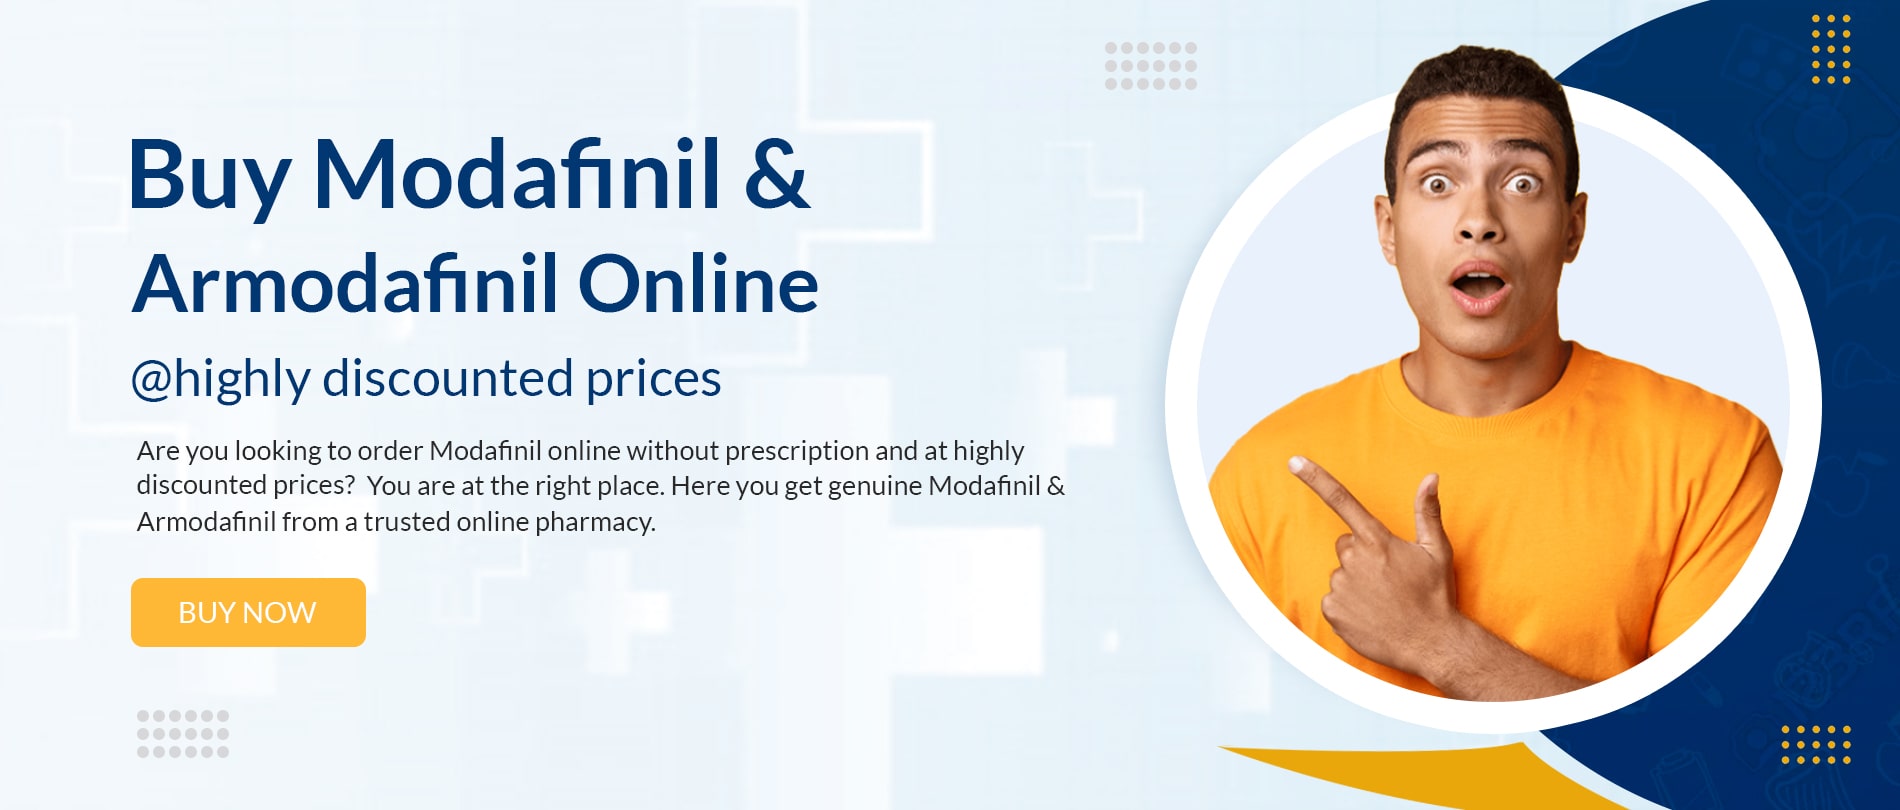 buy modafinil online